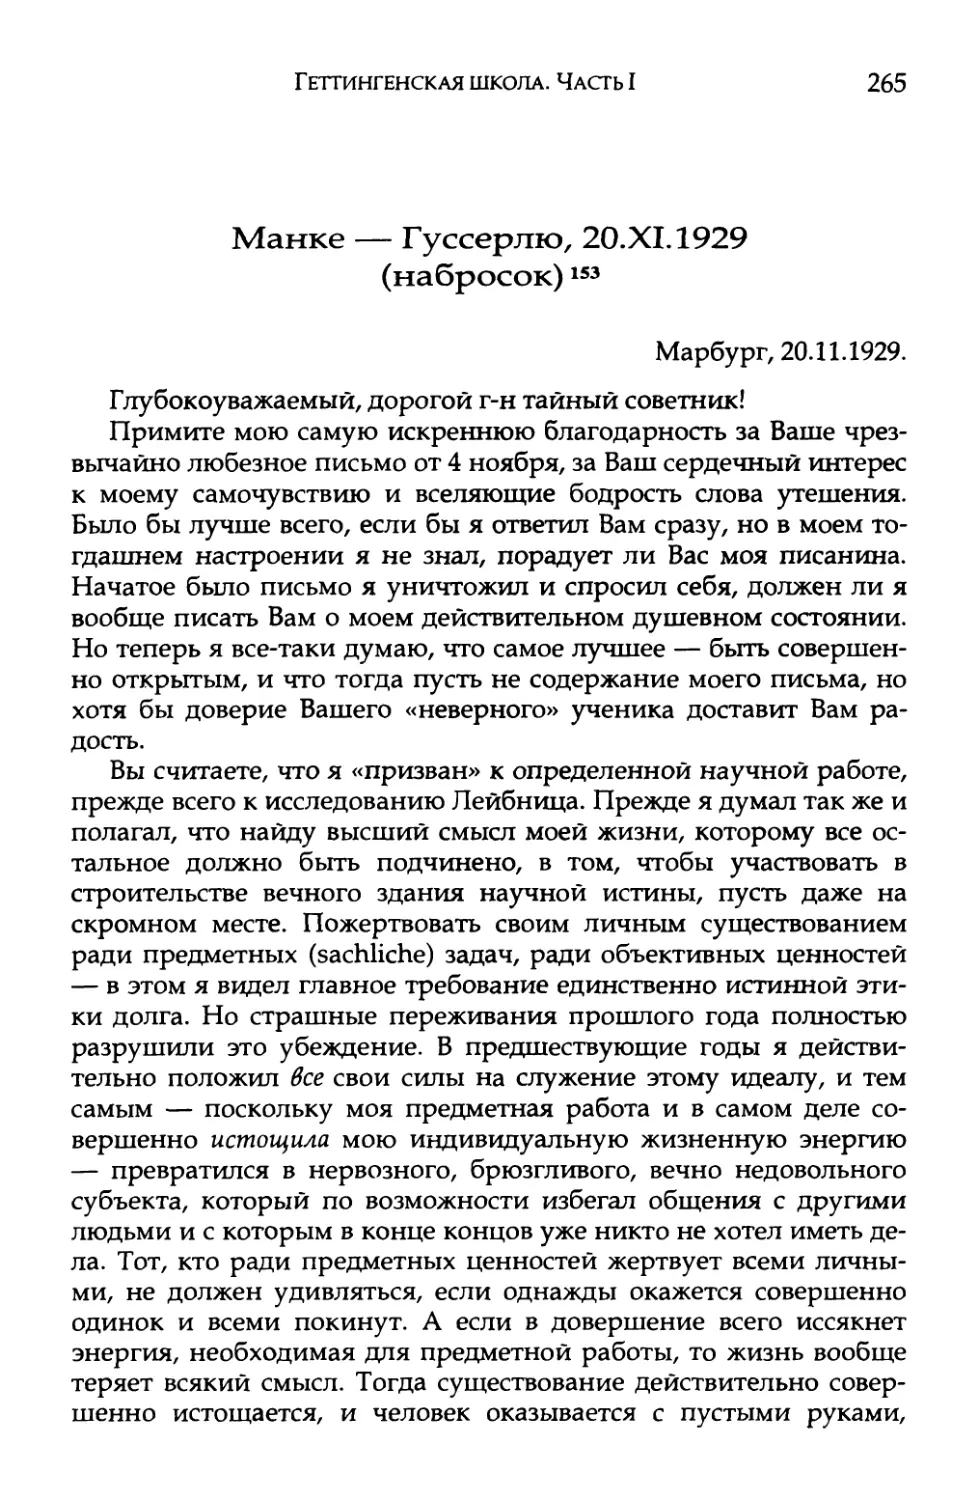 Манке — Гуссерлю, 20.XI.1929 Перевод Е. В. Борисова